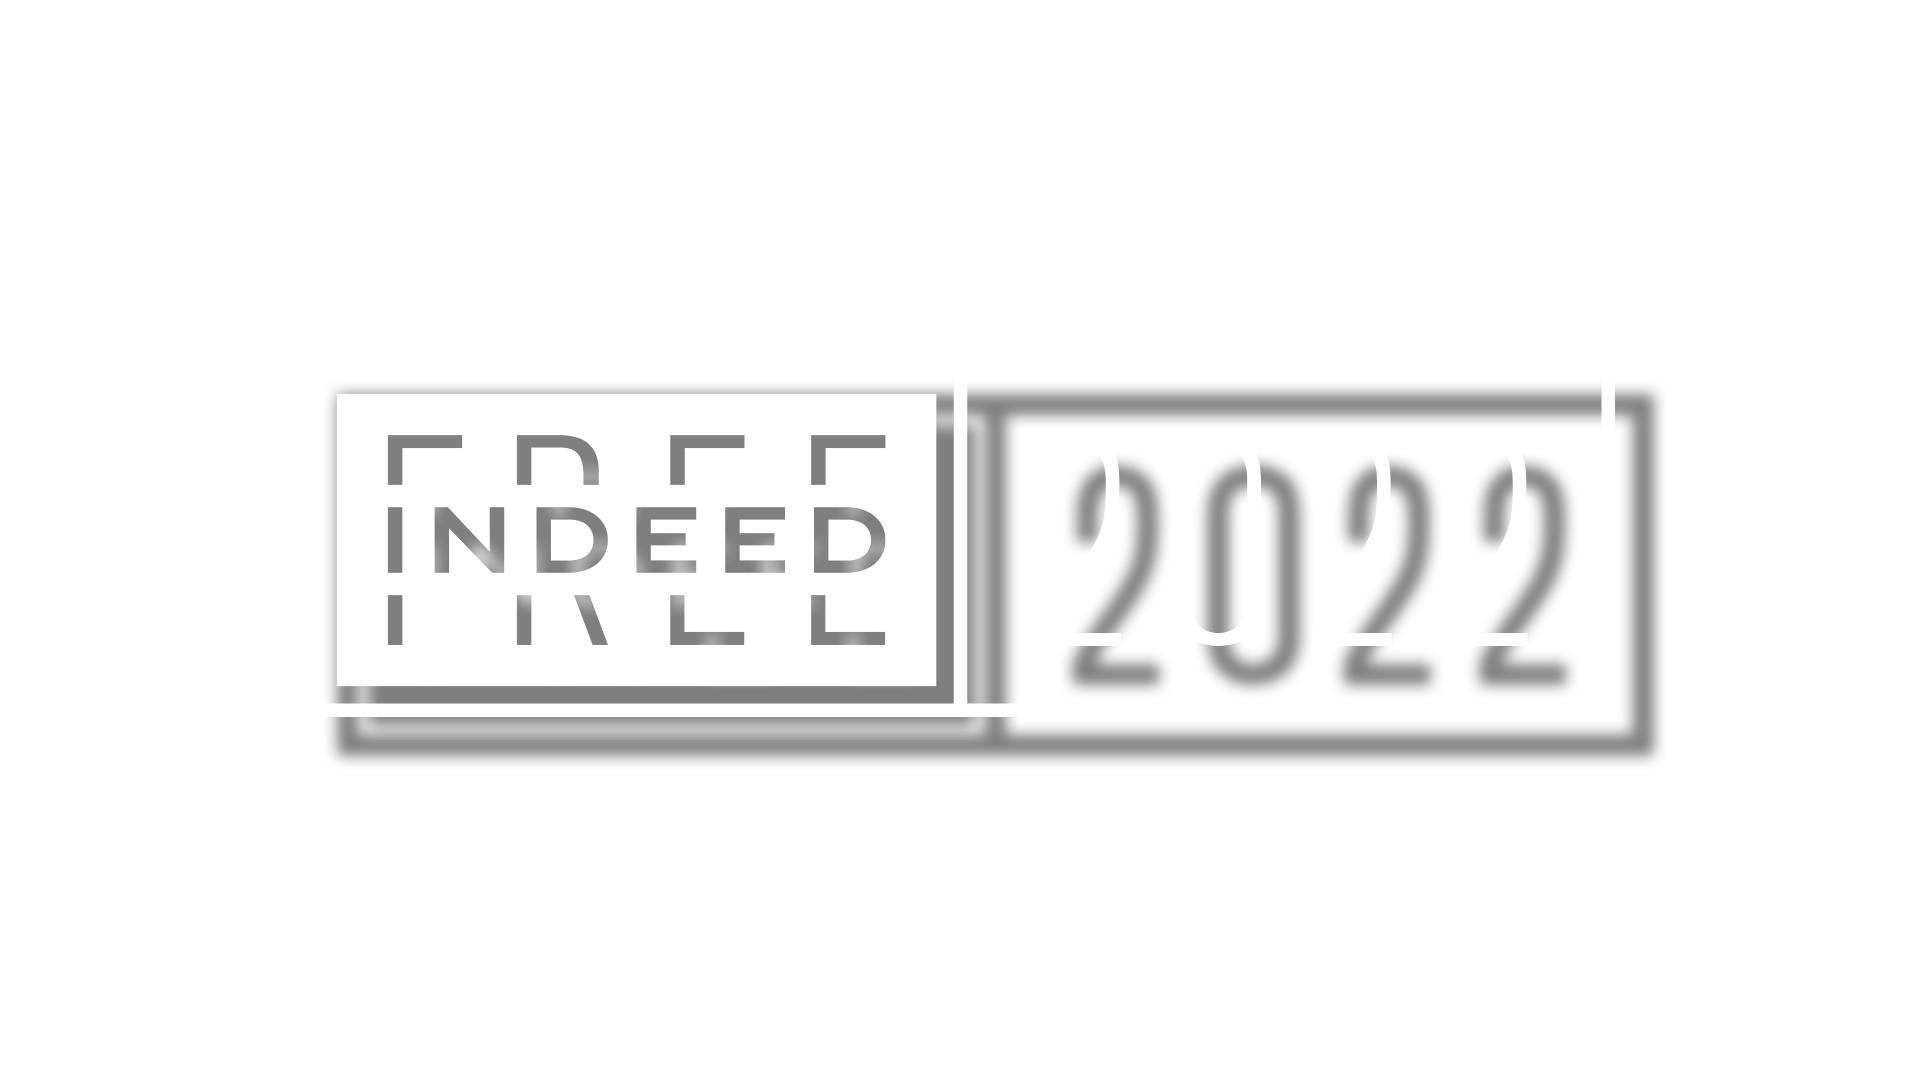 Free Indeed 2022 Logo